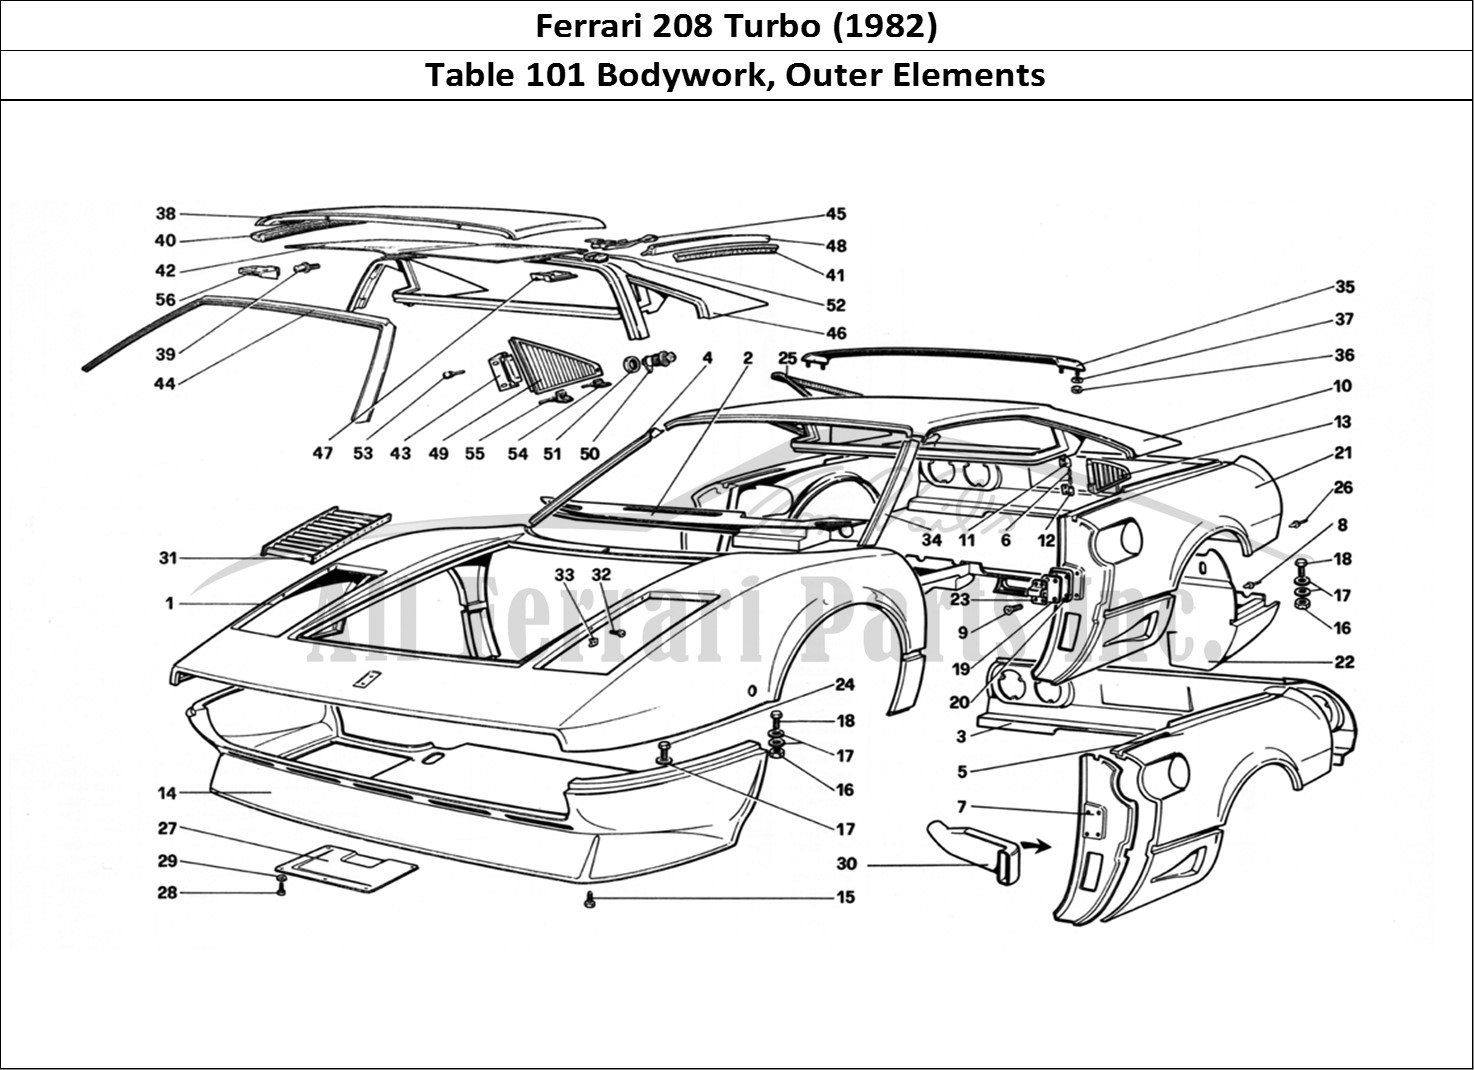 Ferrari Parts Ferrari 208 Turbo (1982) Page 101 Body Shell - Outer Elemen